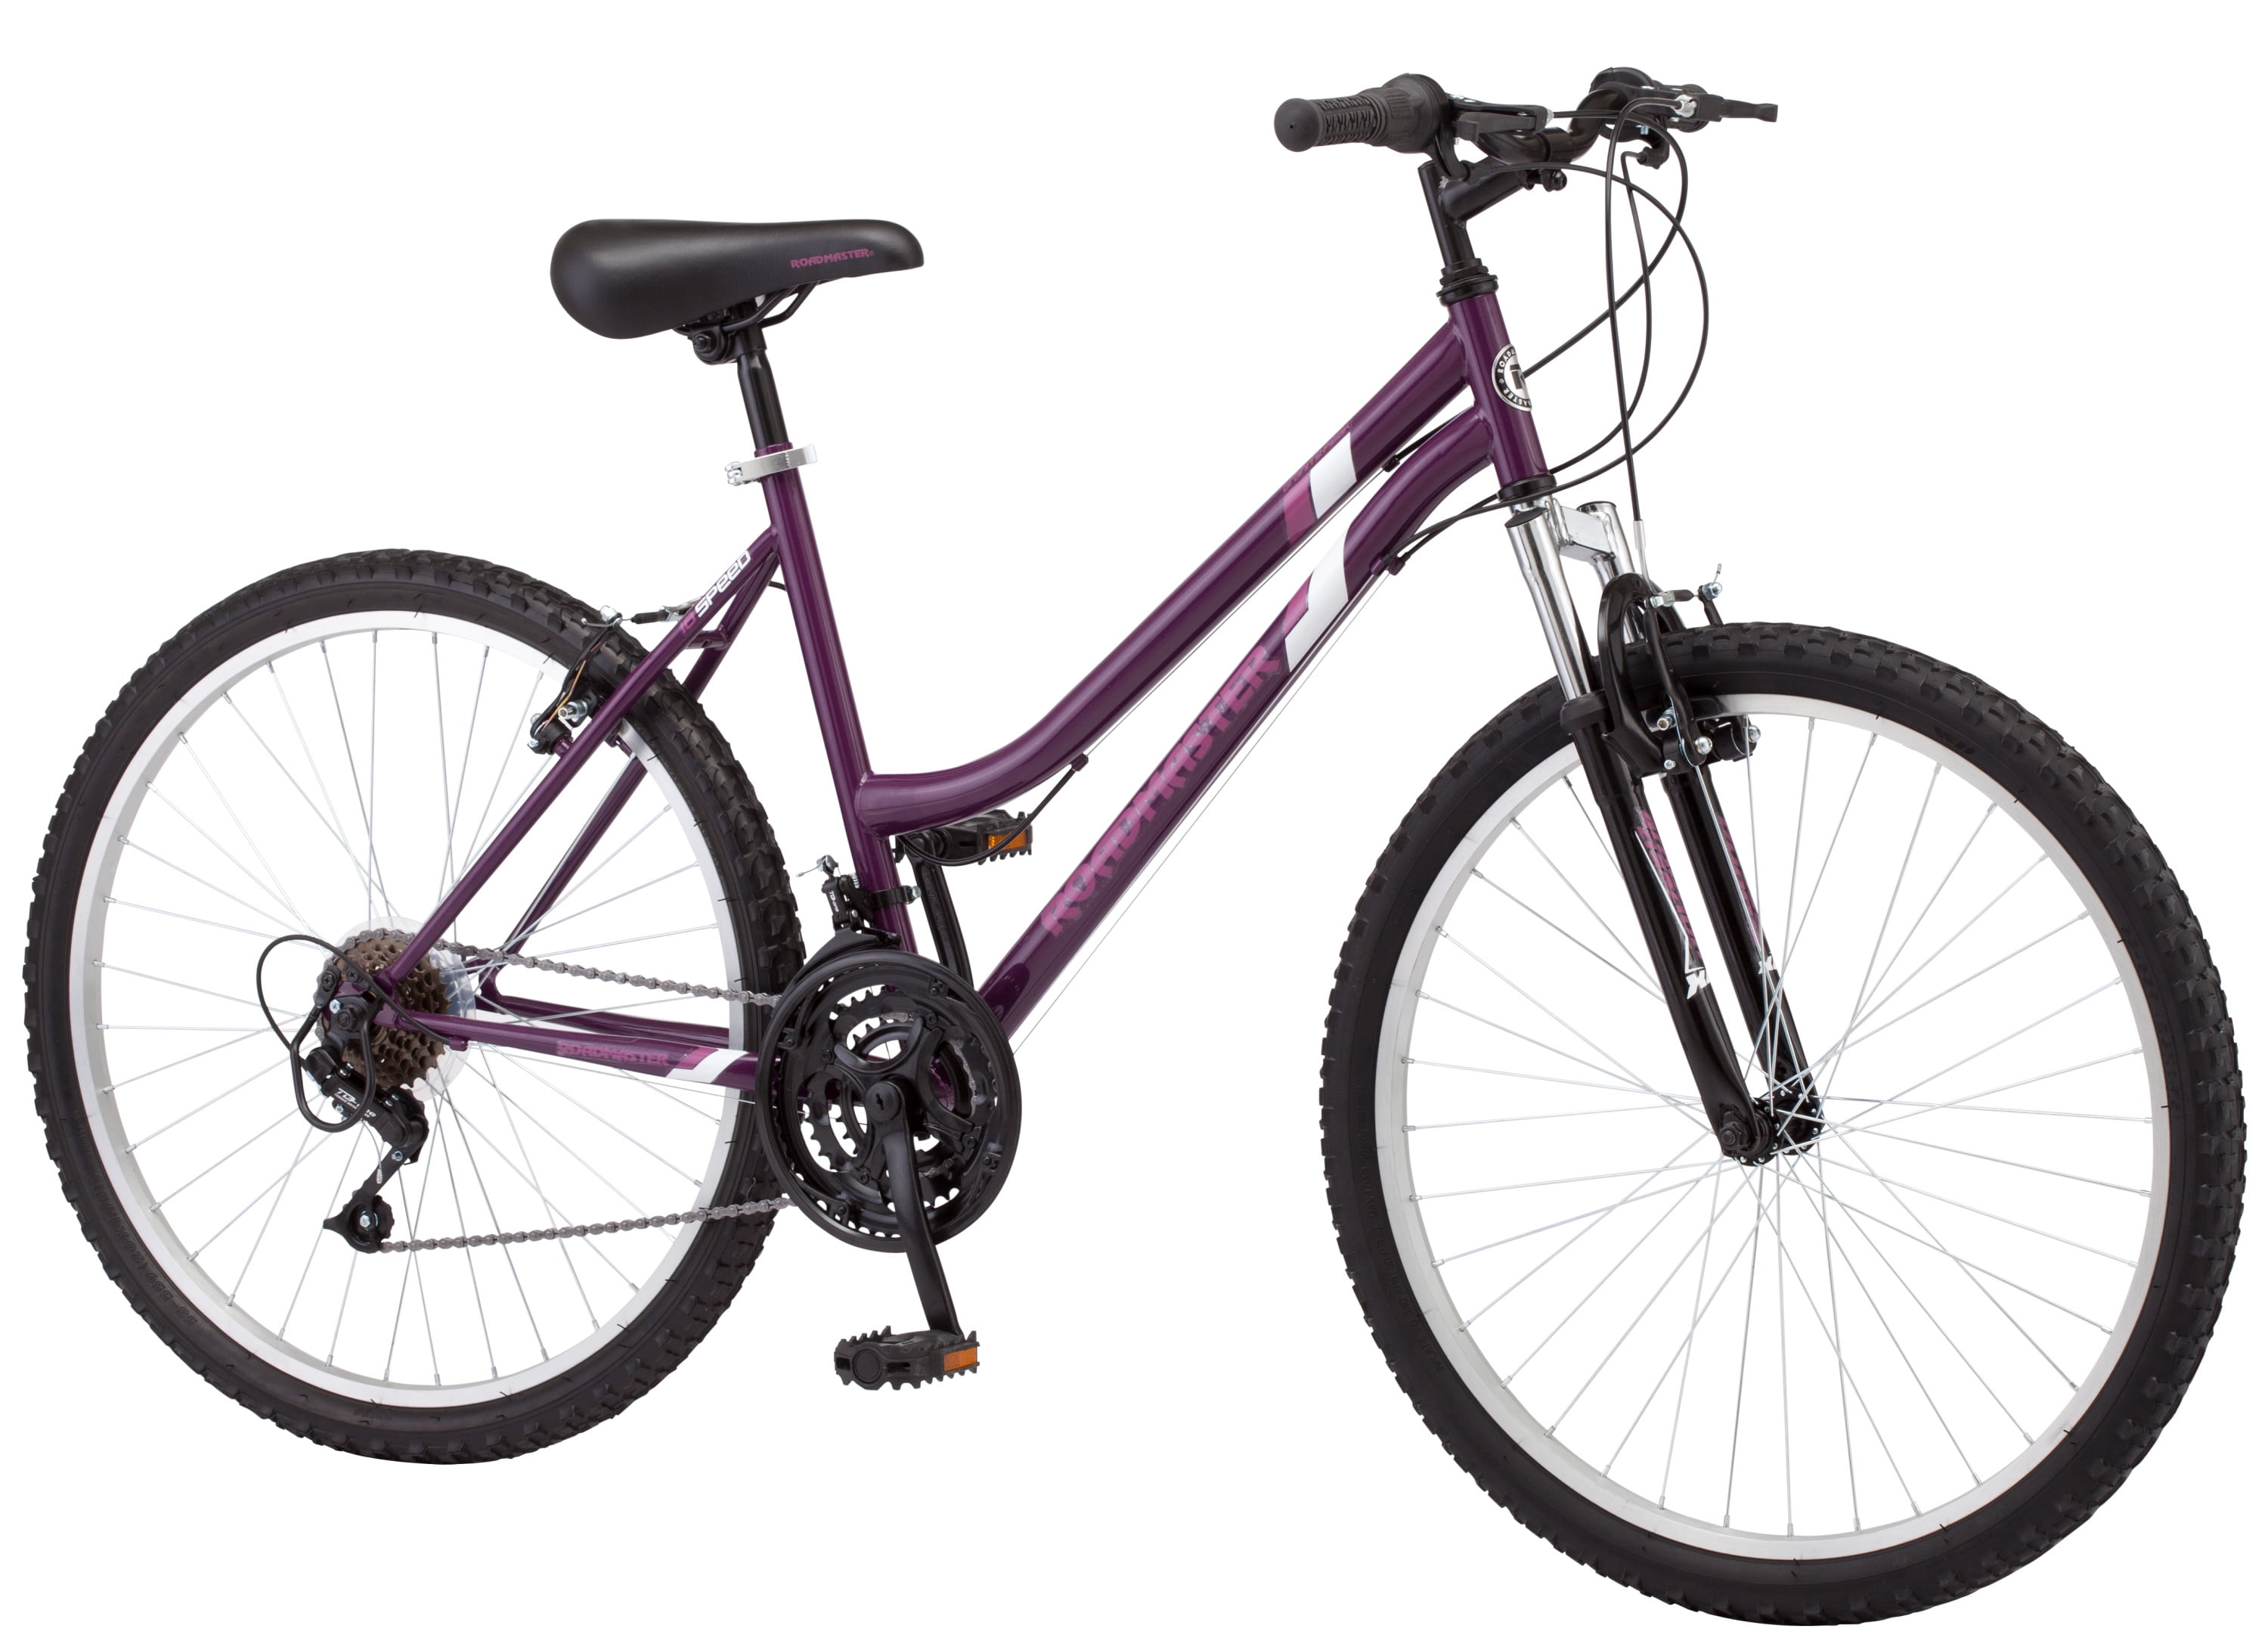 purple roadmaster bike